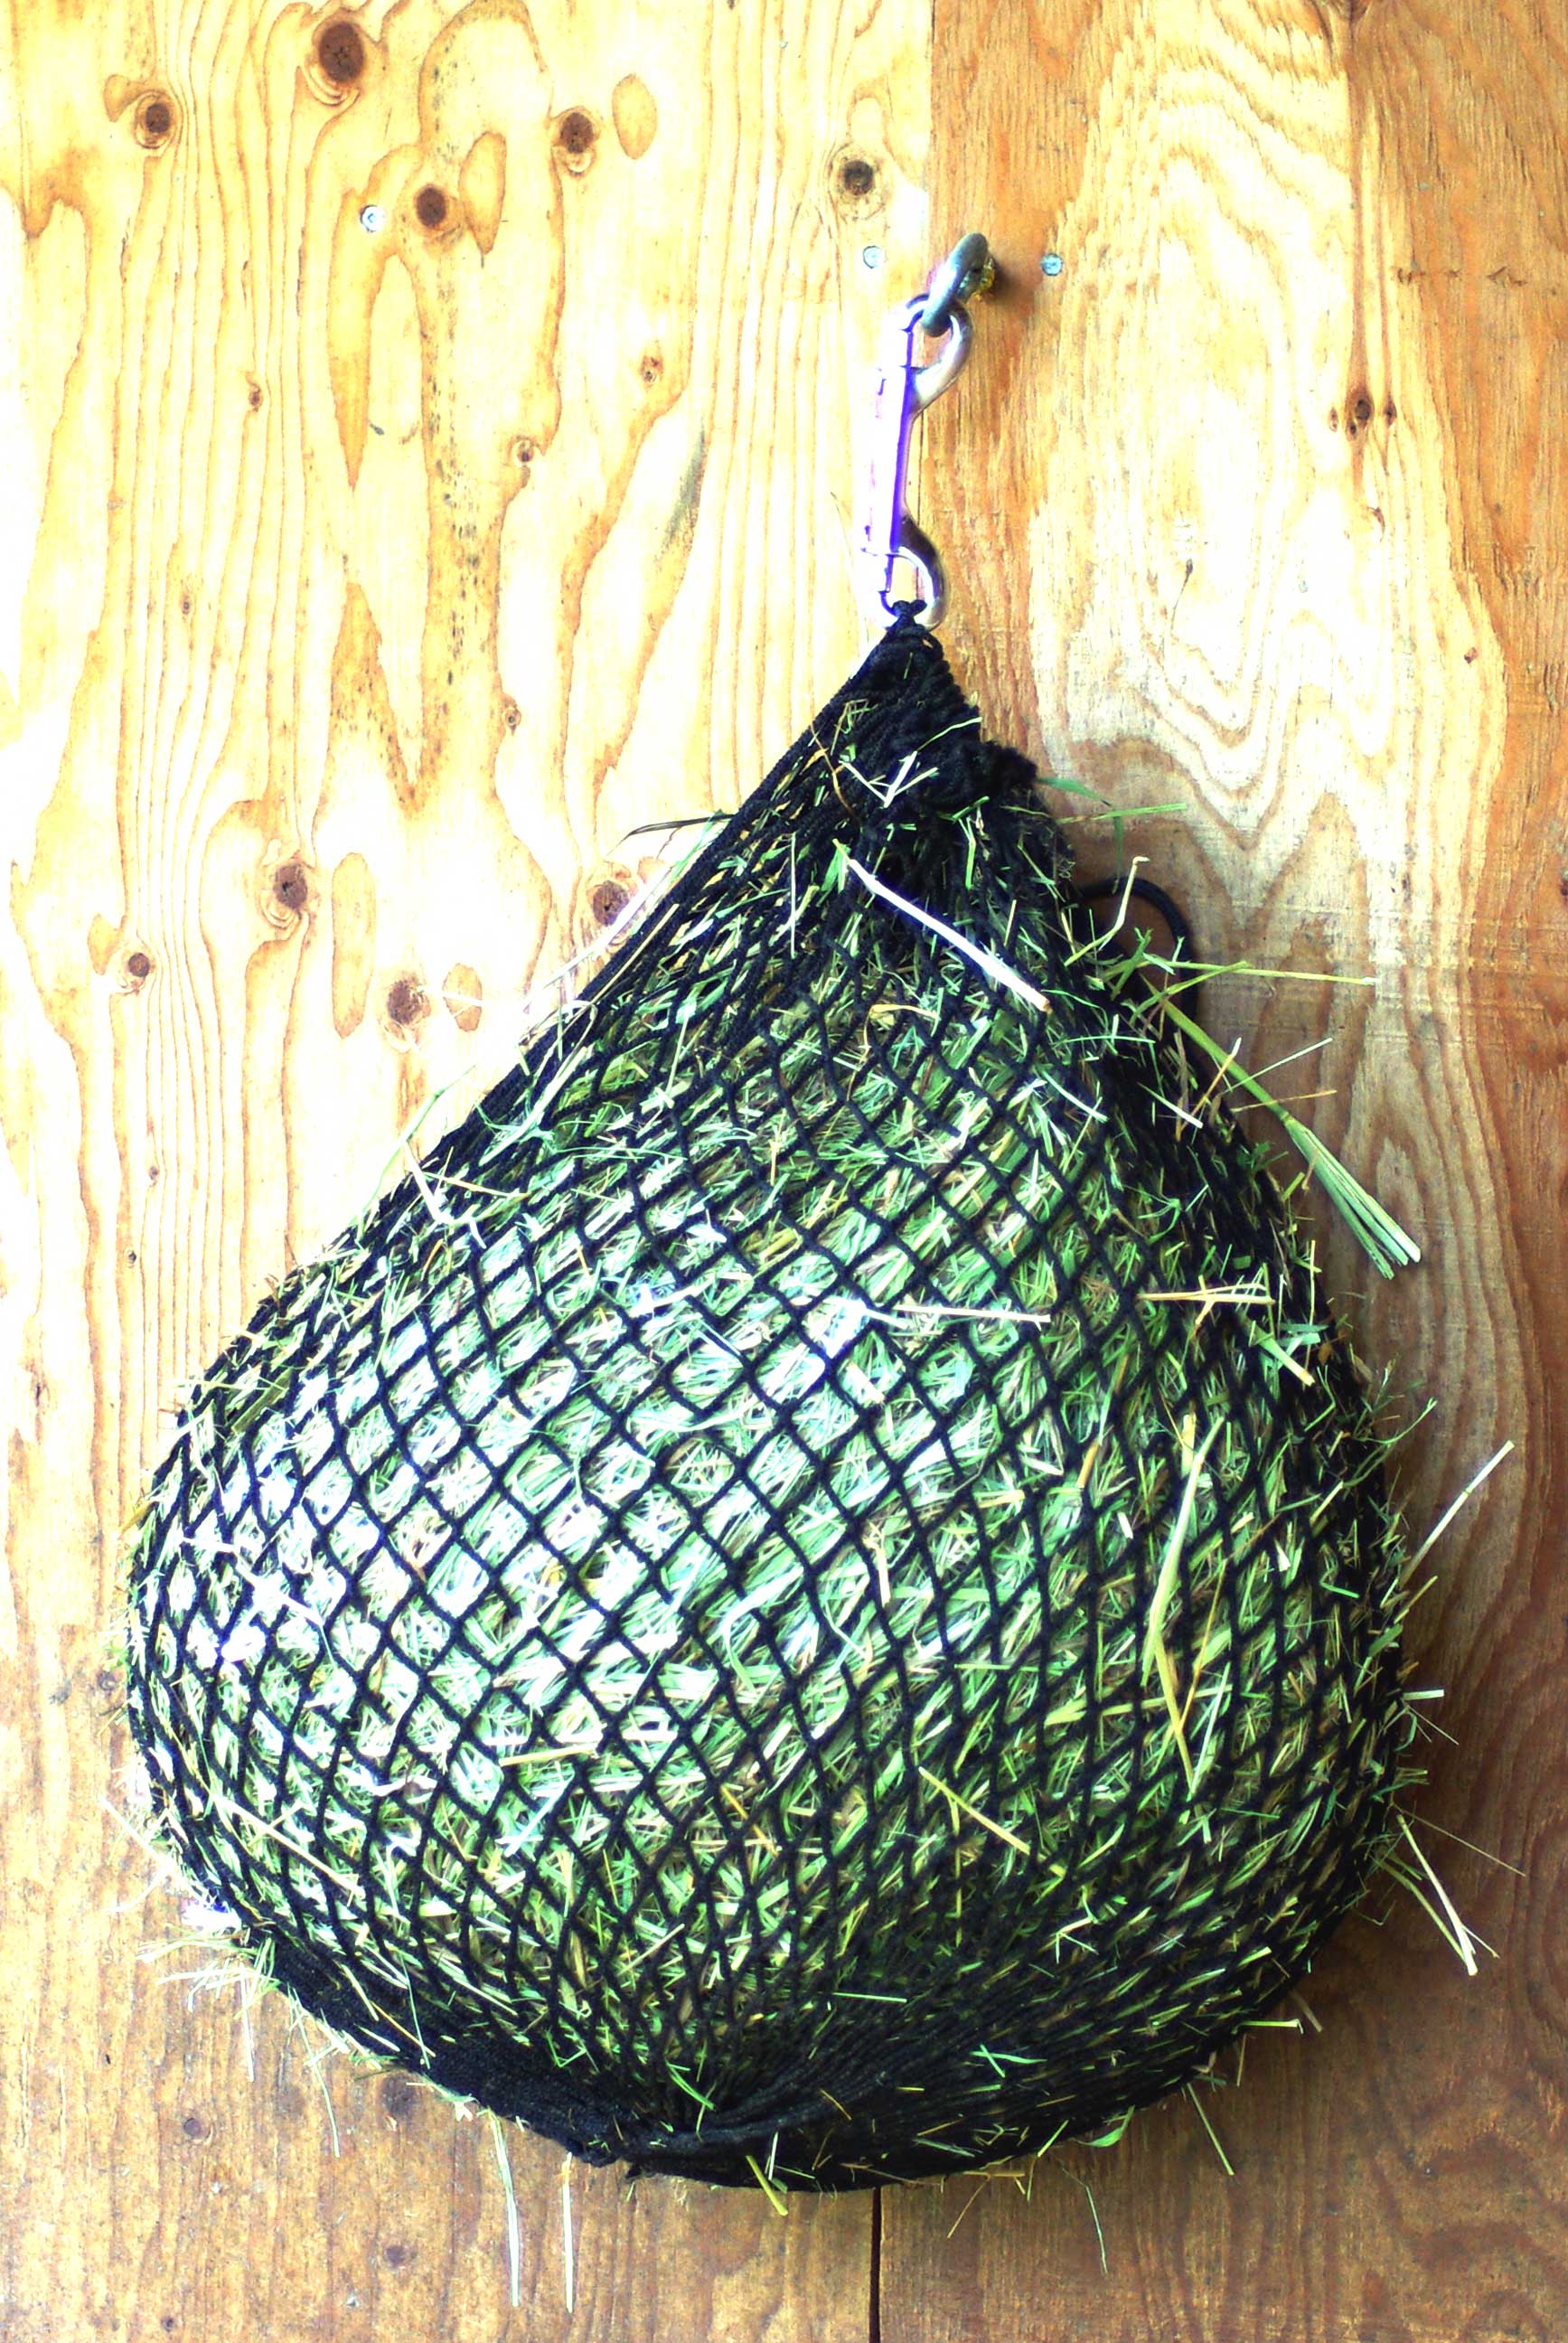 X3 PINK Haylage greedy feeder nets haynet small holes holes measure 1” 